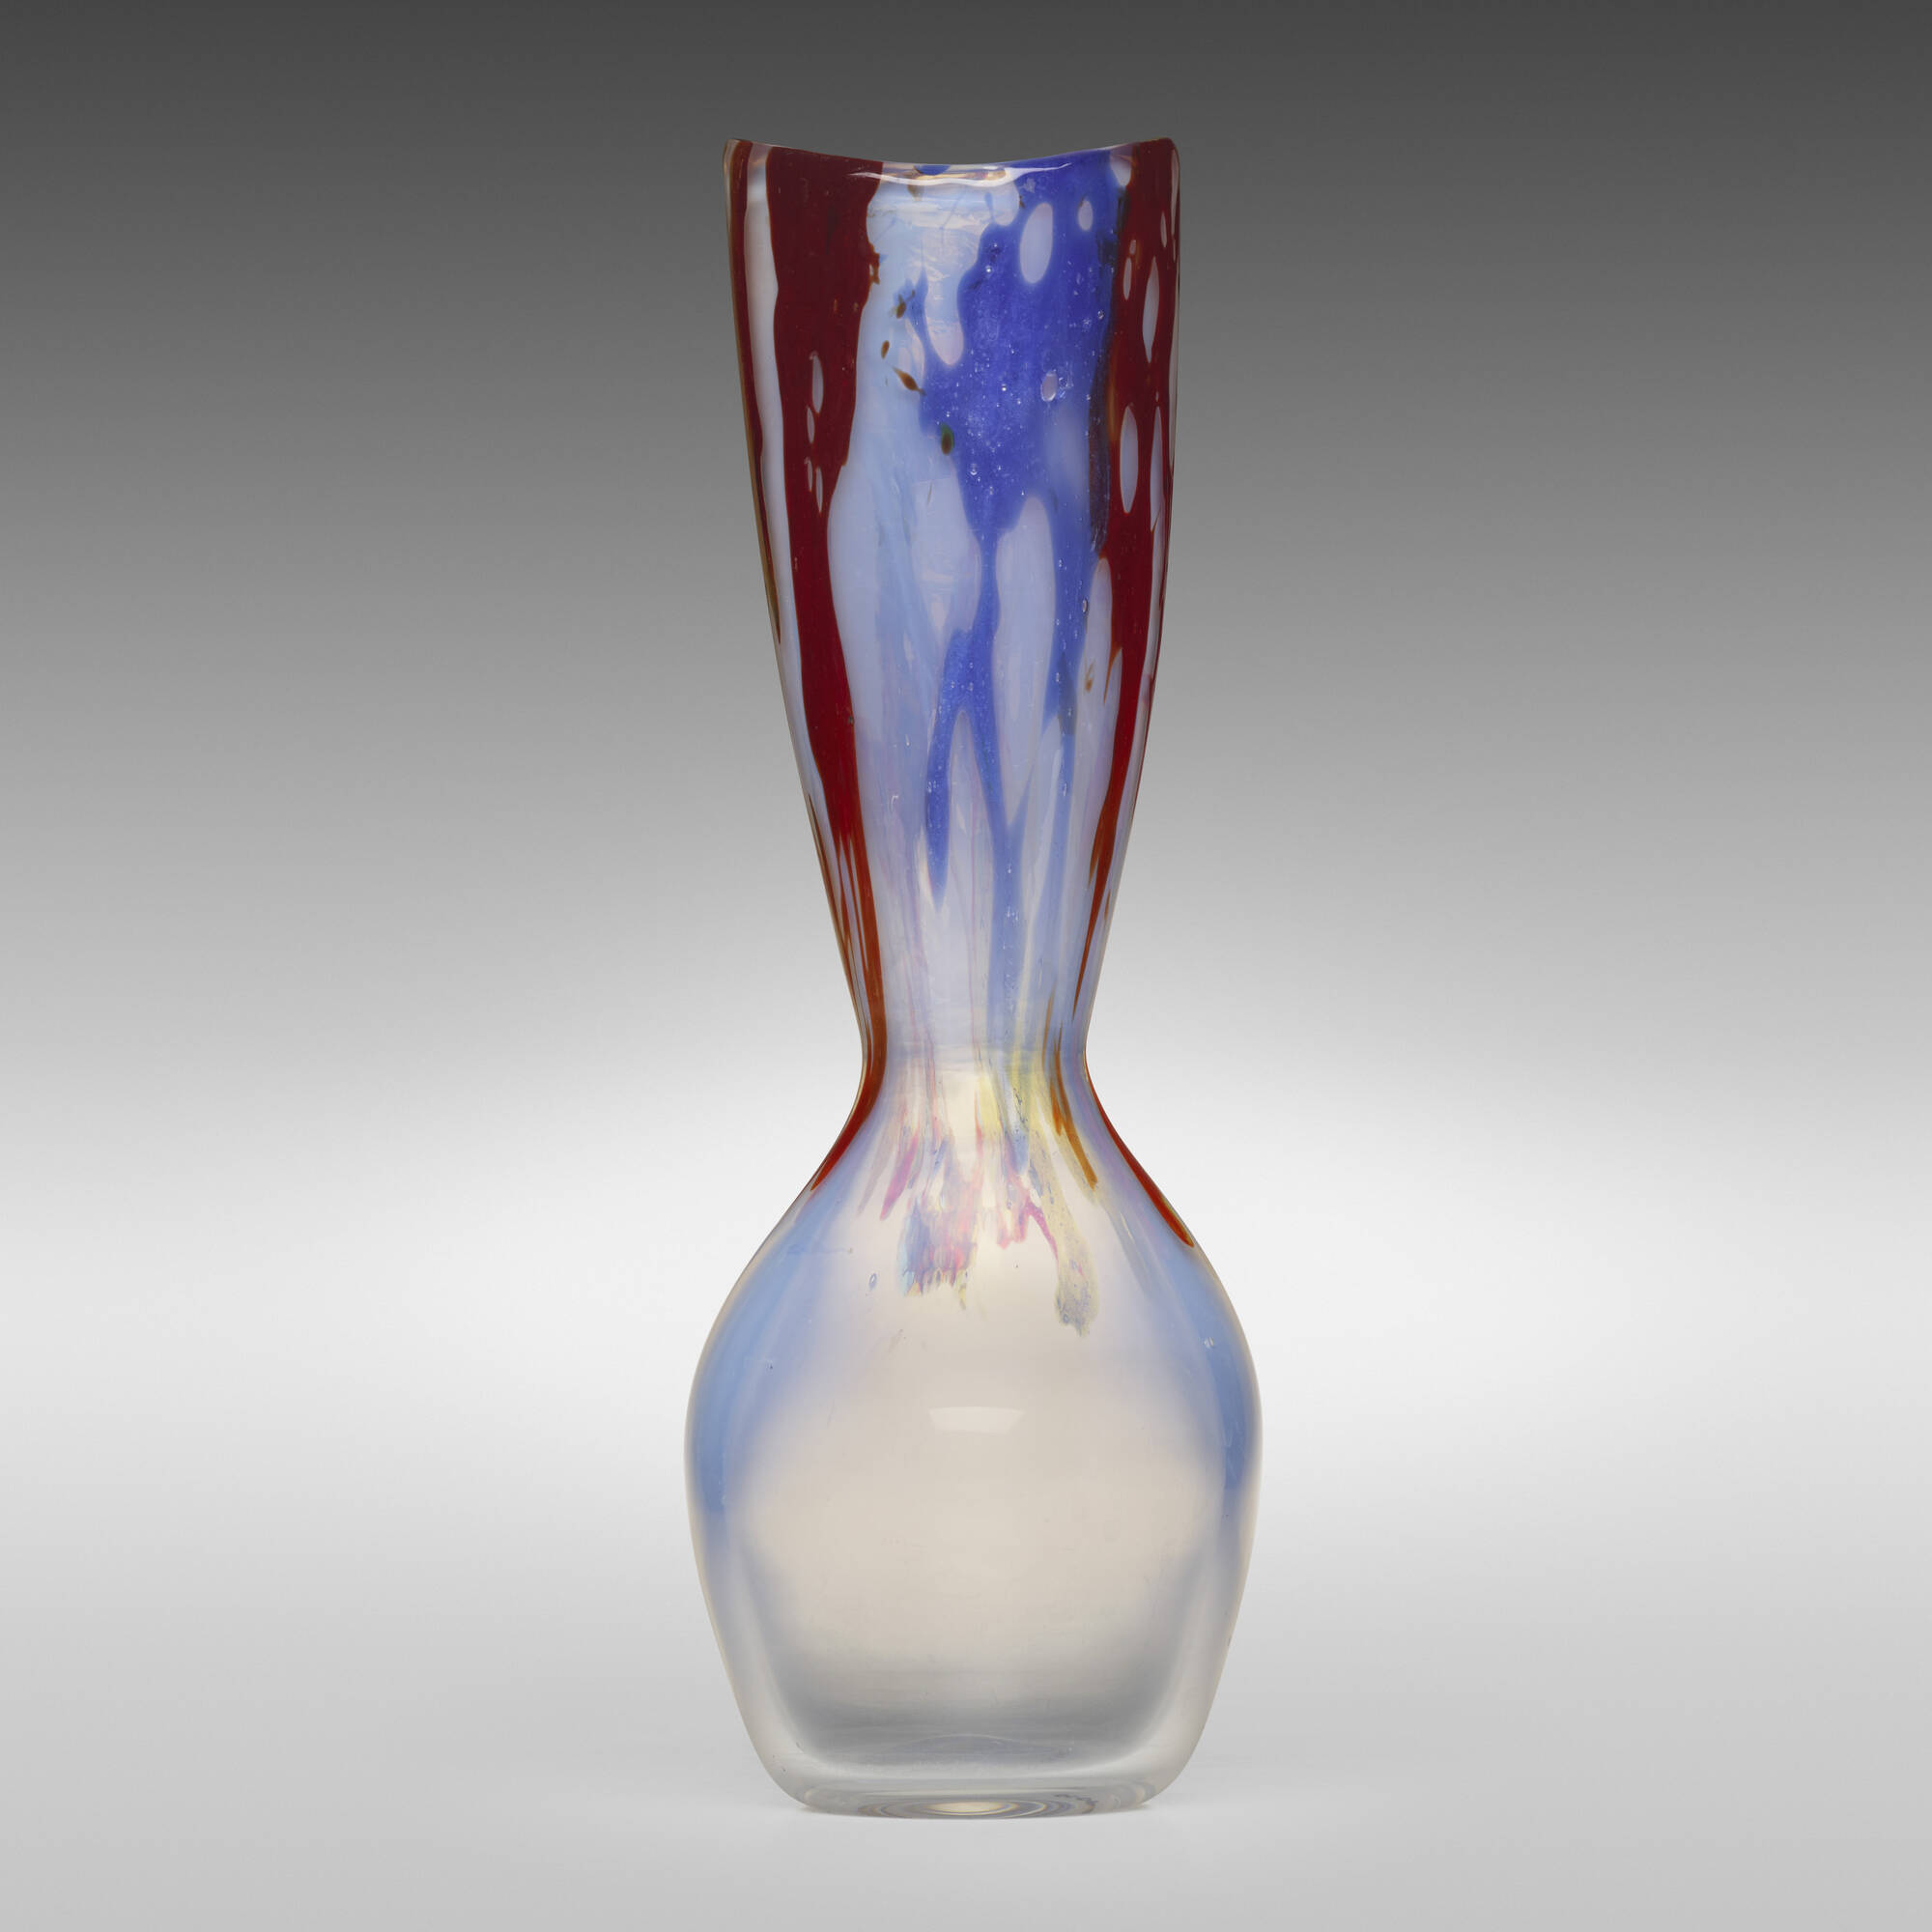 137: DINO MARTENS, Rare Vetro Vulcano vase, model 5879 < Important 